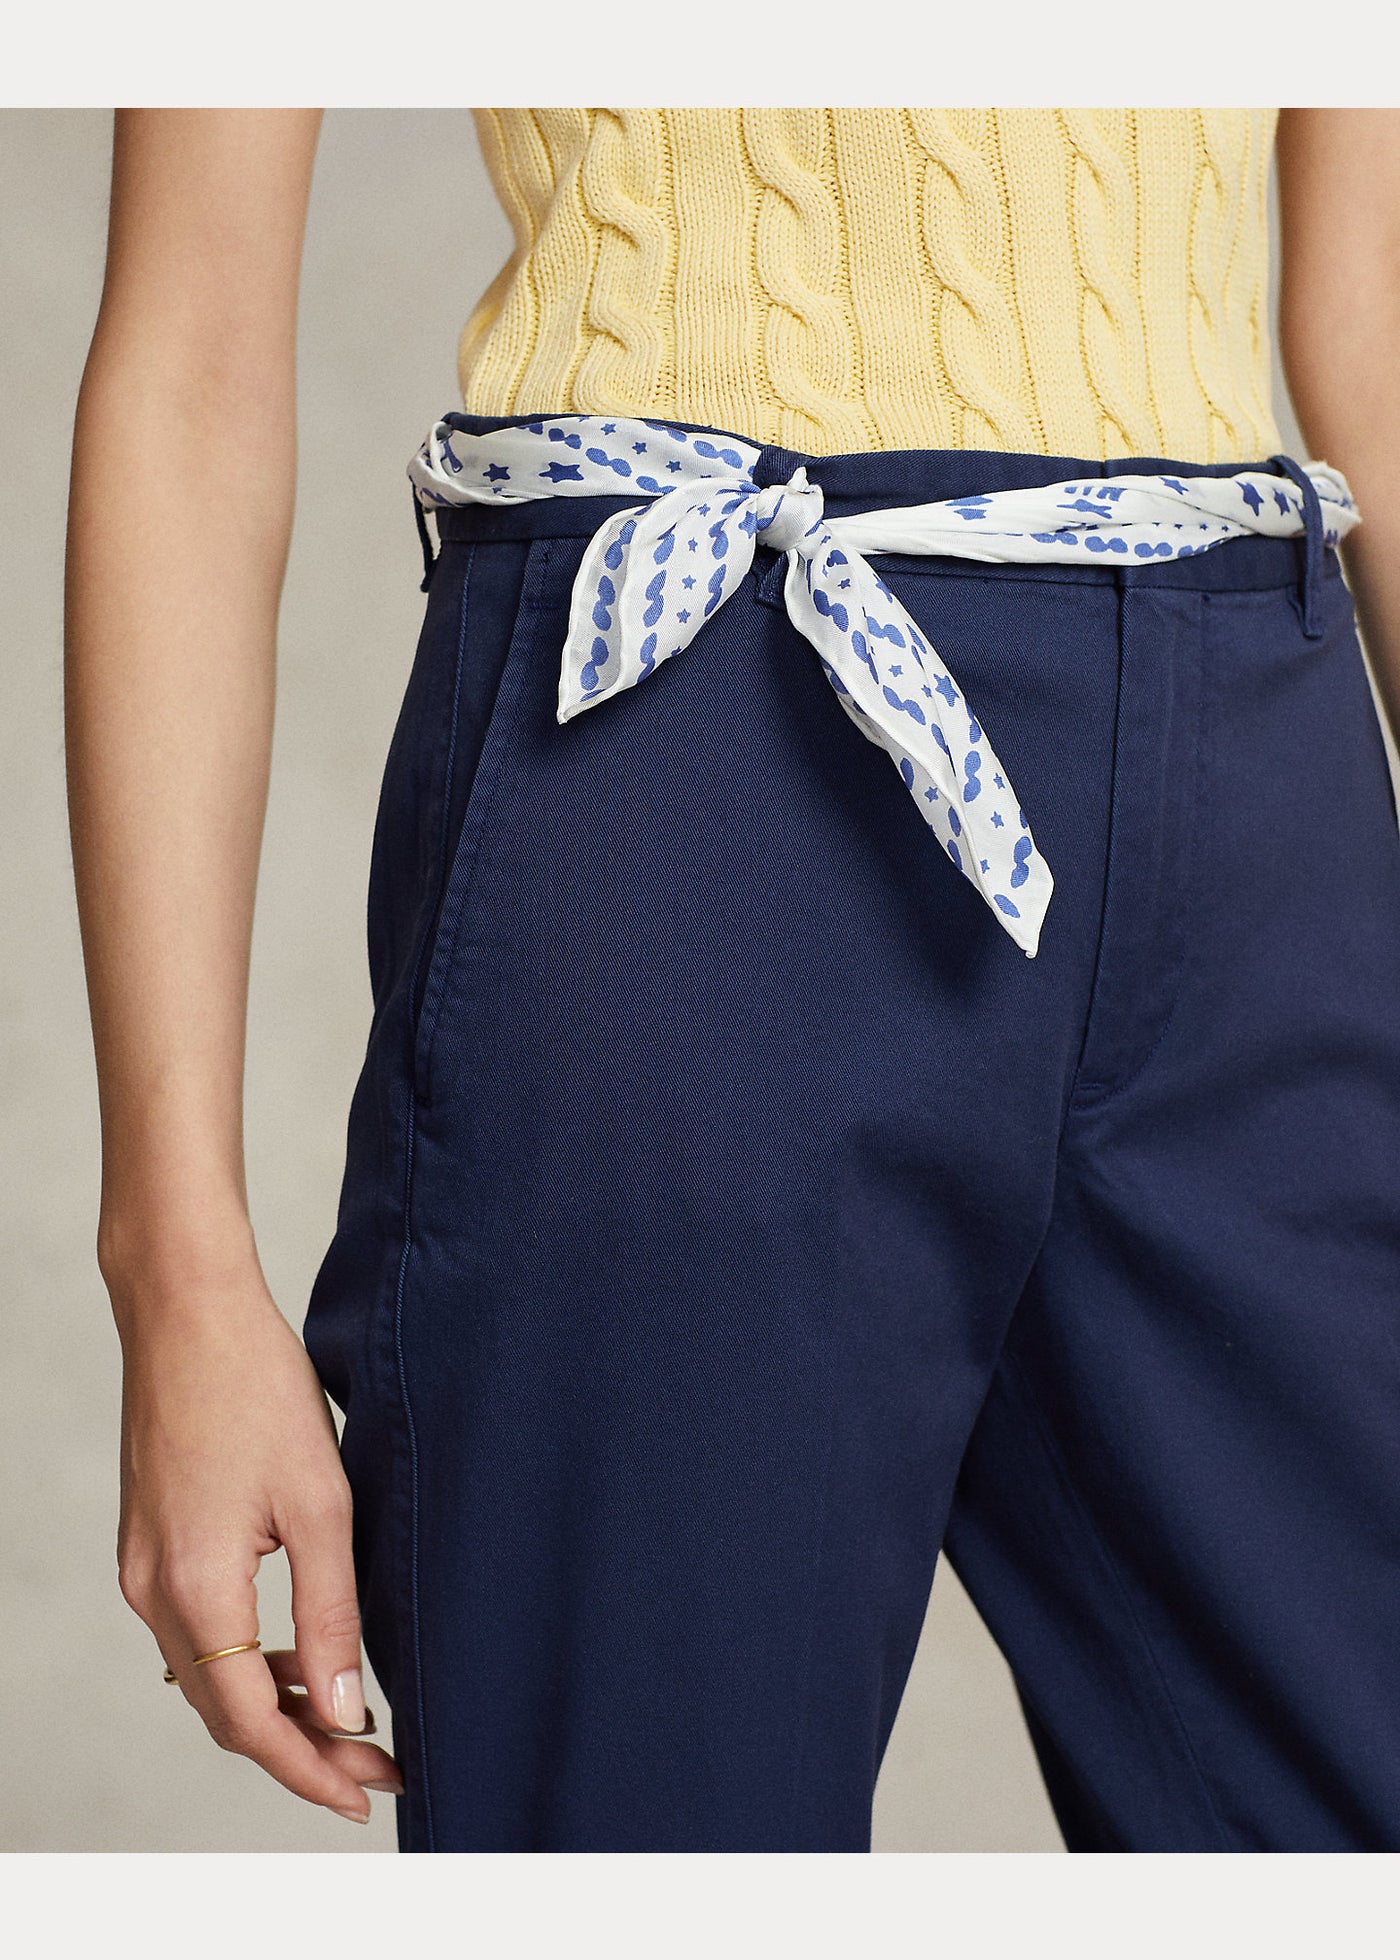 Ralph Lauren Cropped Slim Fit Twill Chino Trouser | Newport Navy